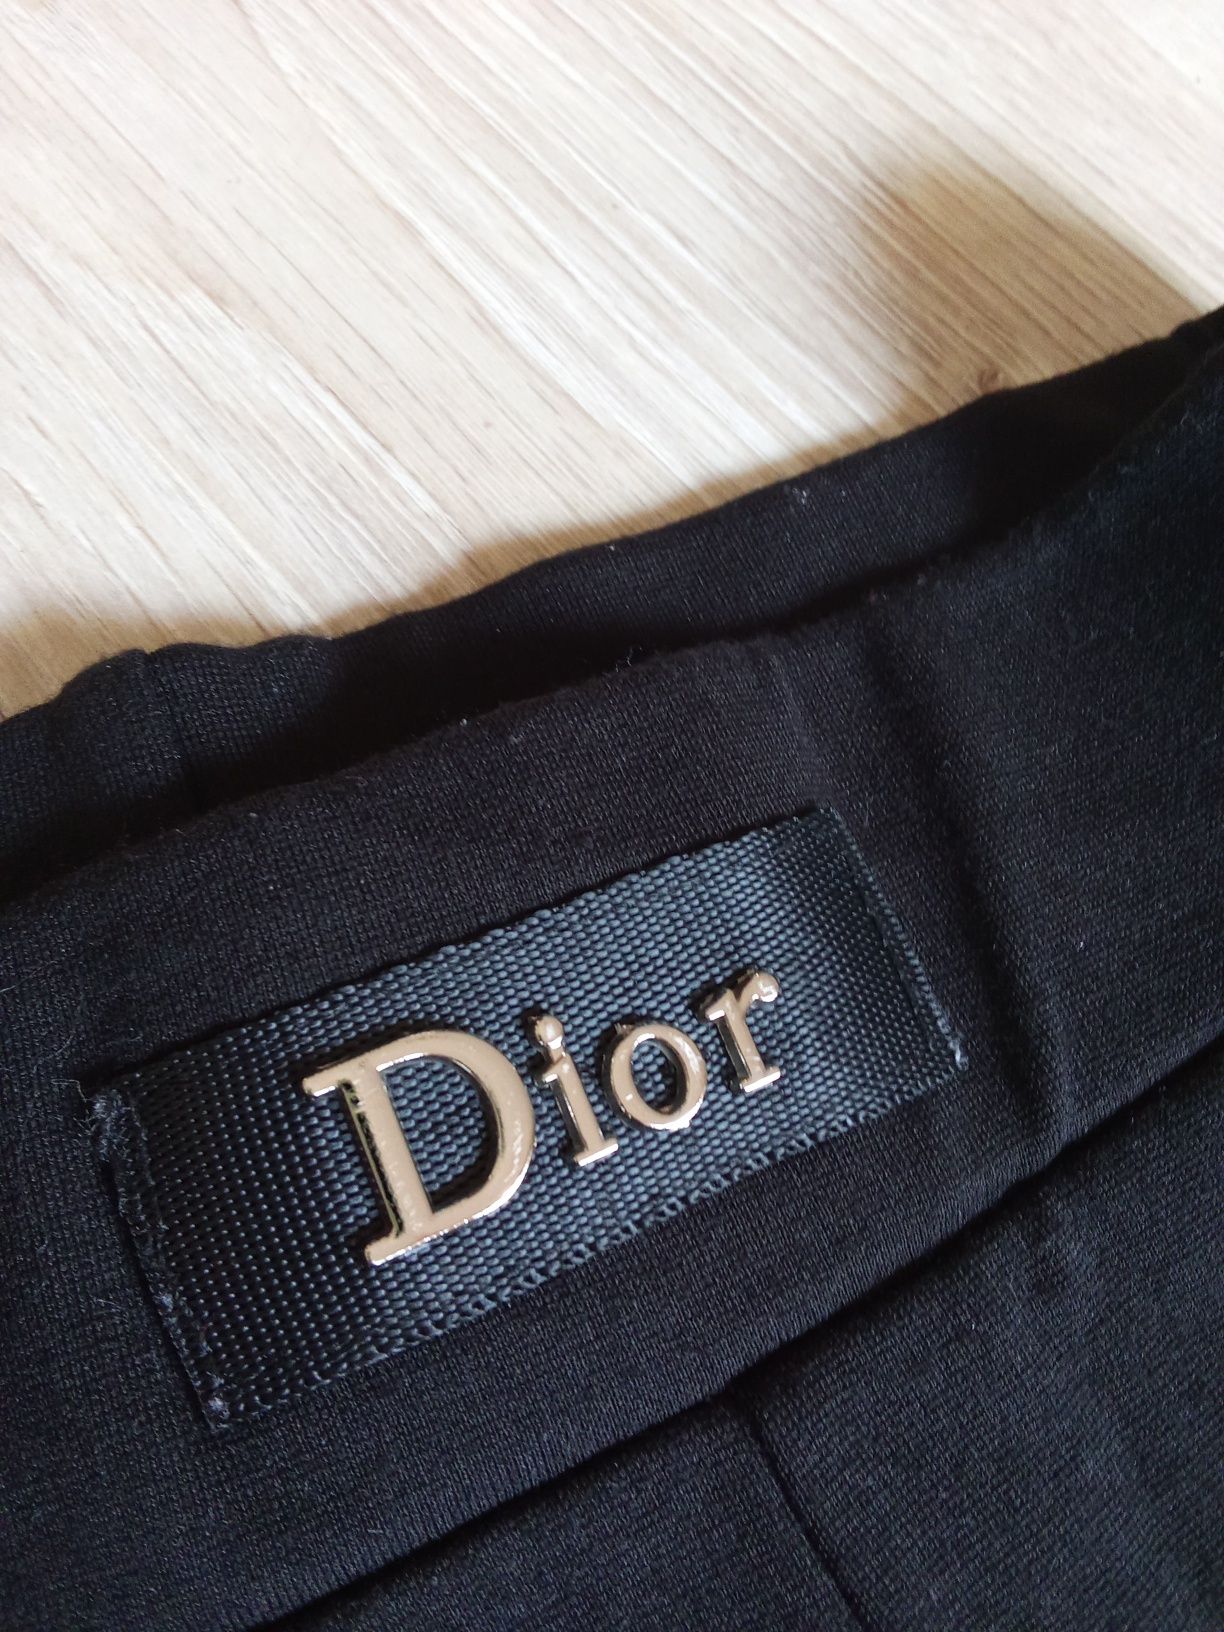 Dior nowe legginsy s